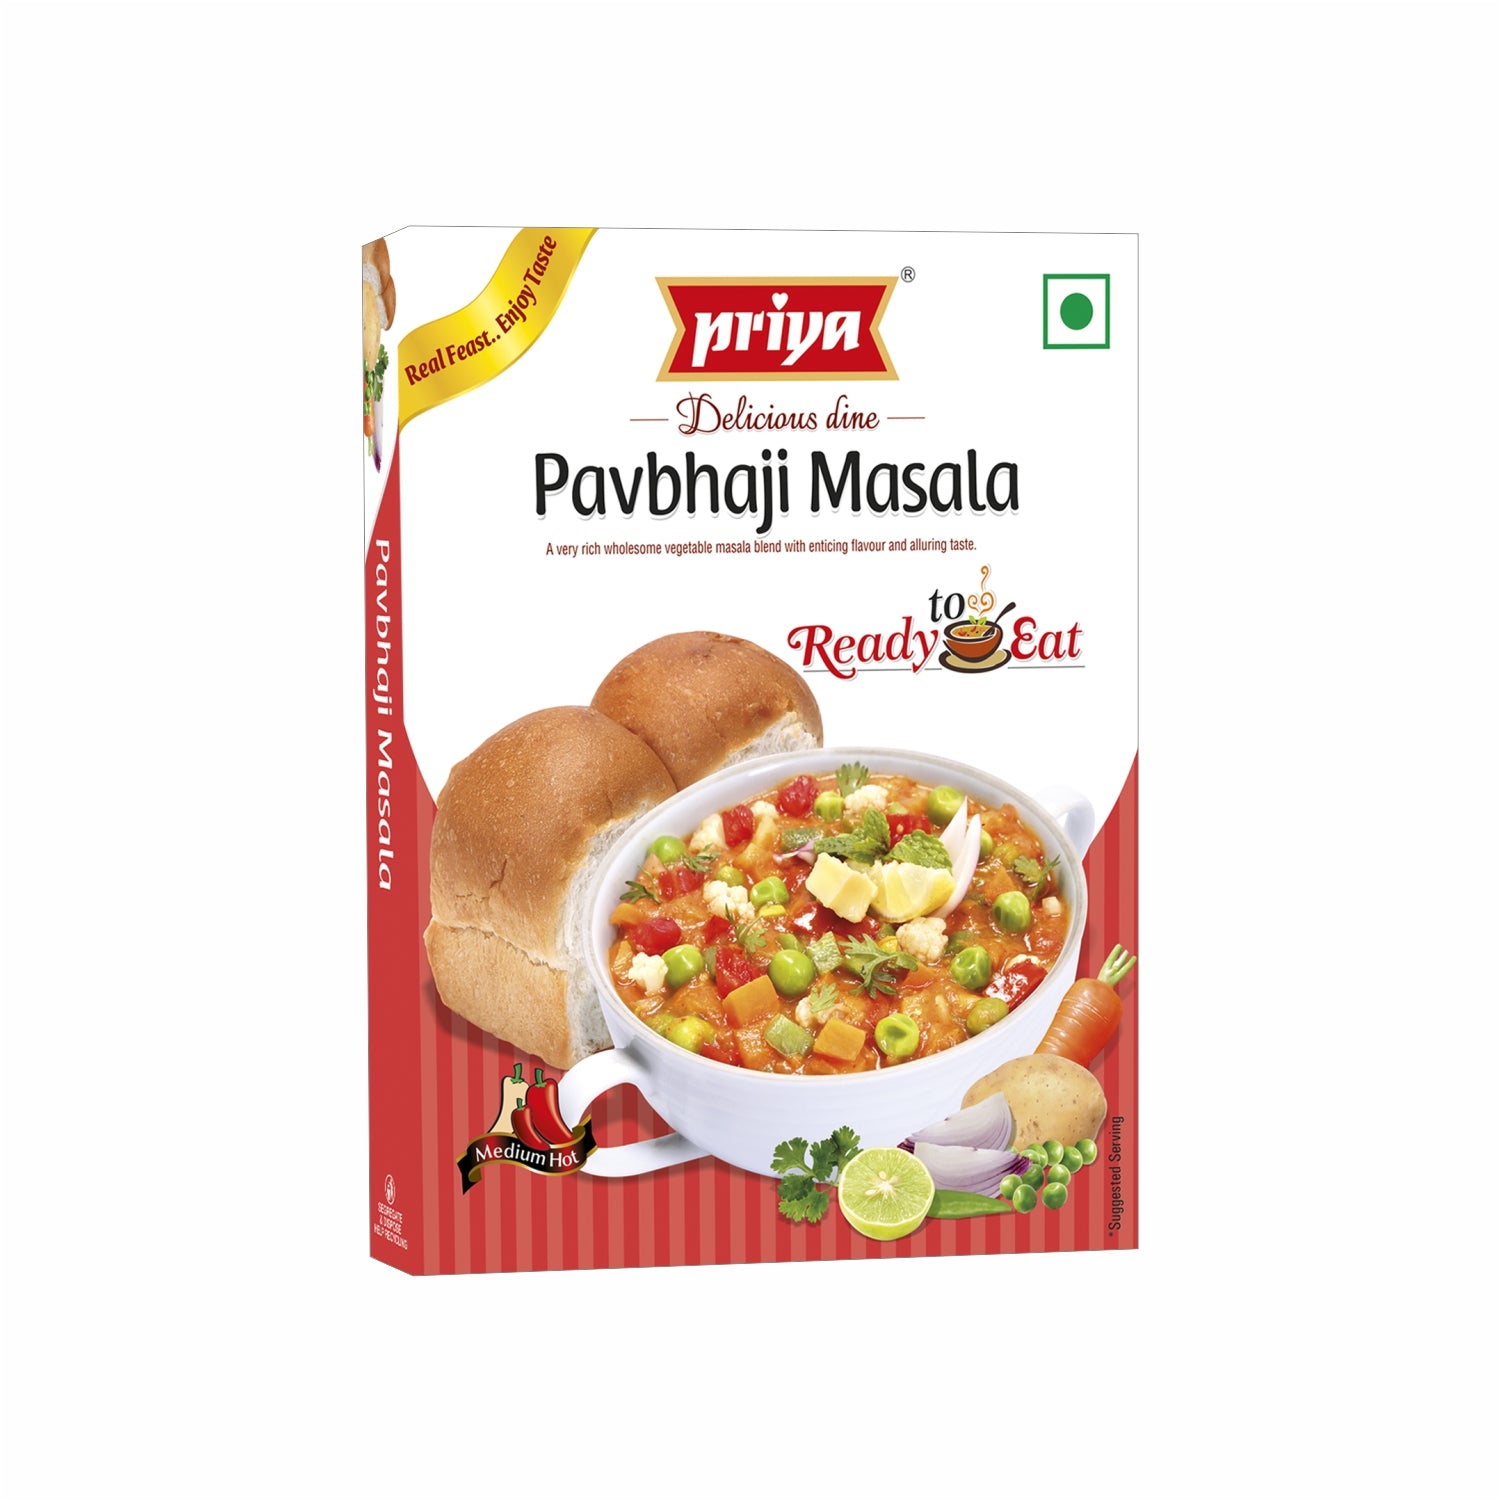 Ready To Eat Pavbhaji Masala 300g